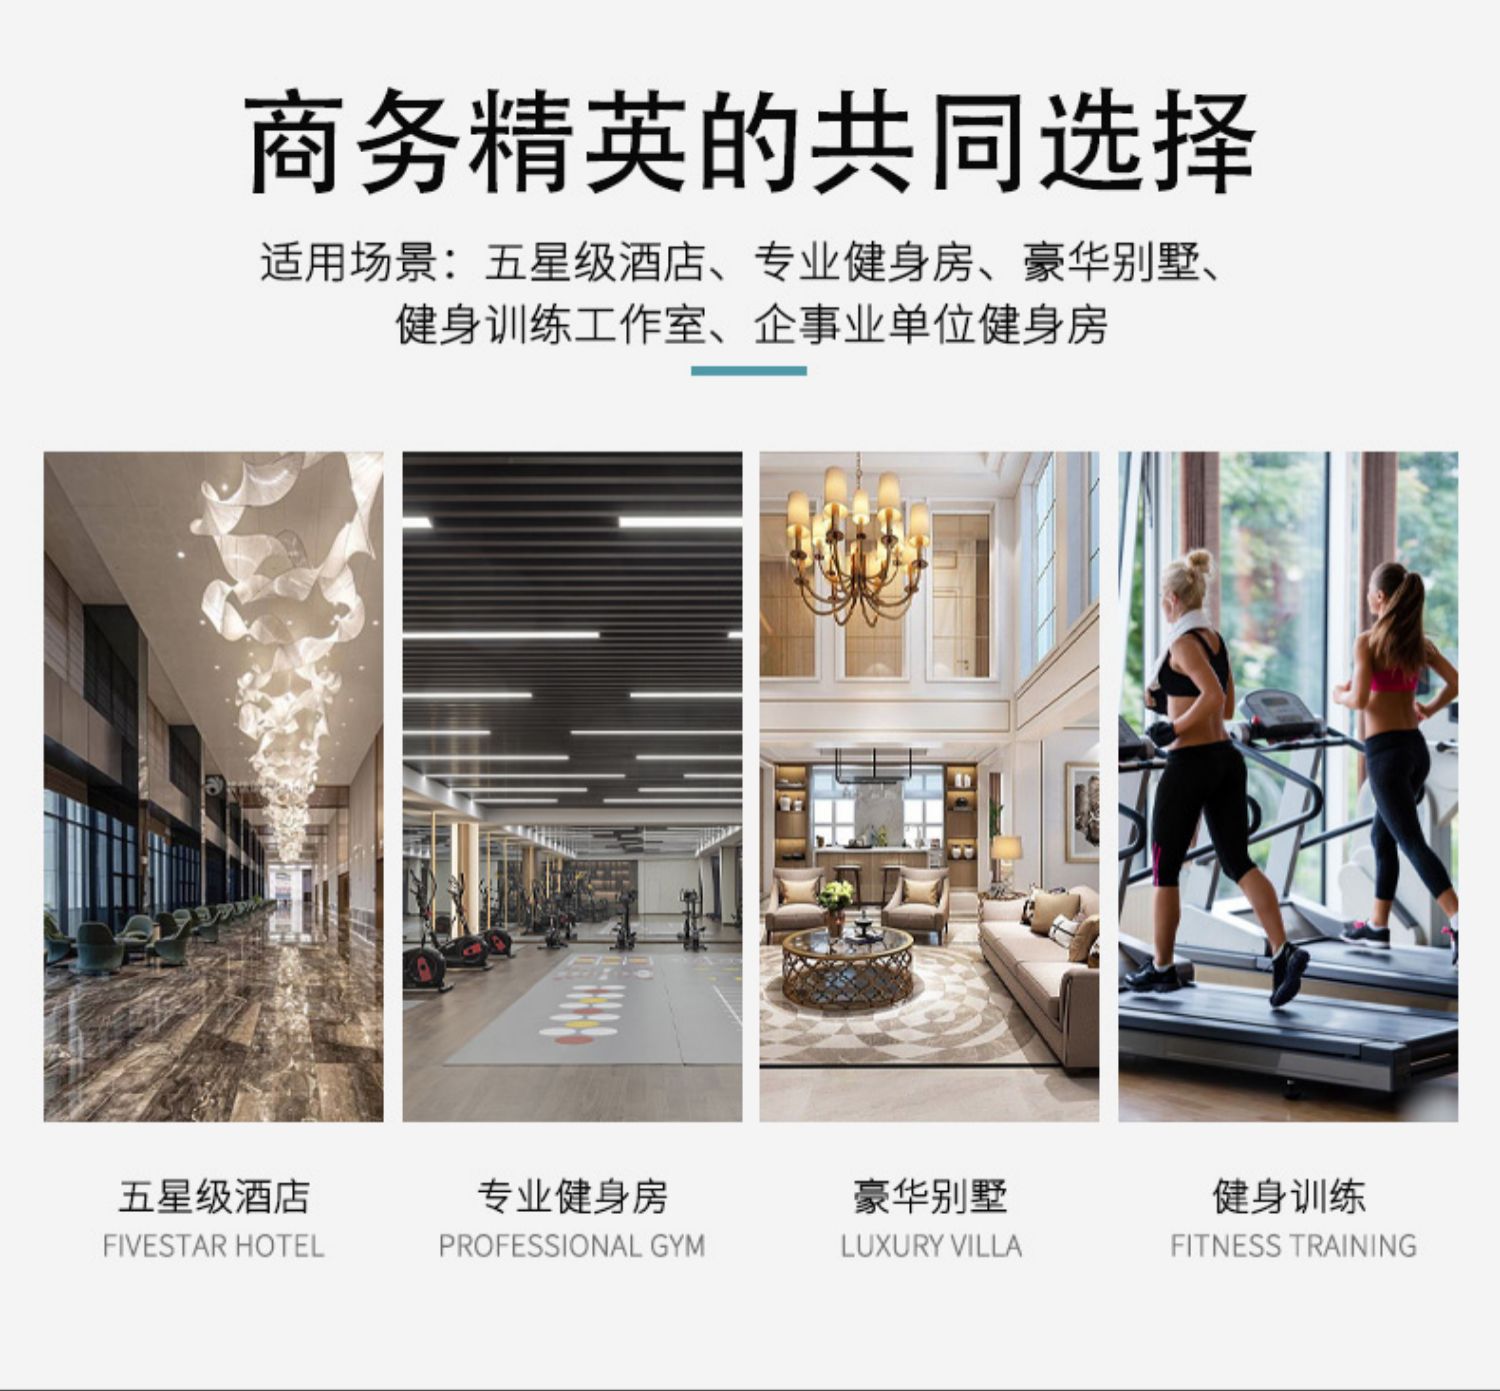 Shuhua treadmill gym commercial V6 large intelligent silent enterprise and public institution fitness equipment SH-